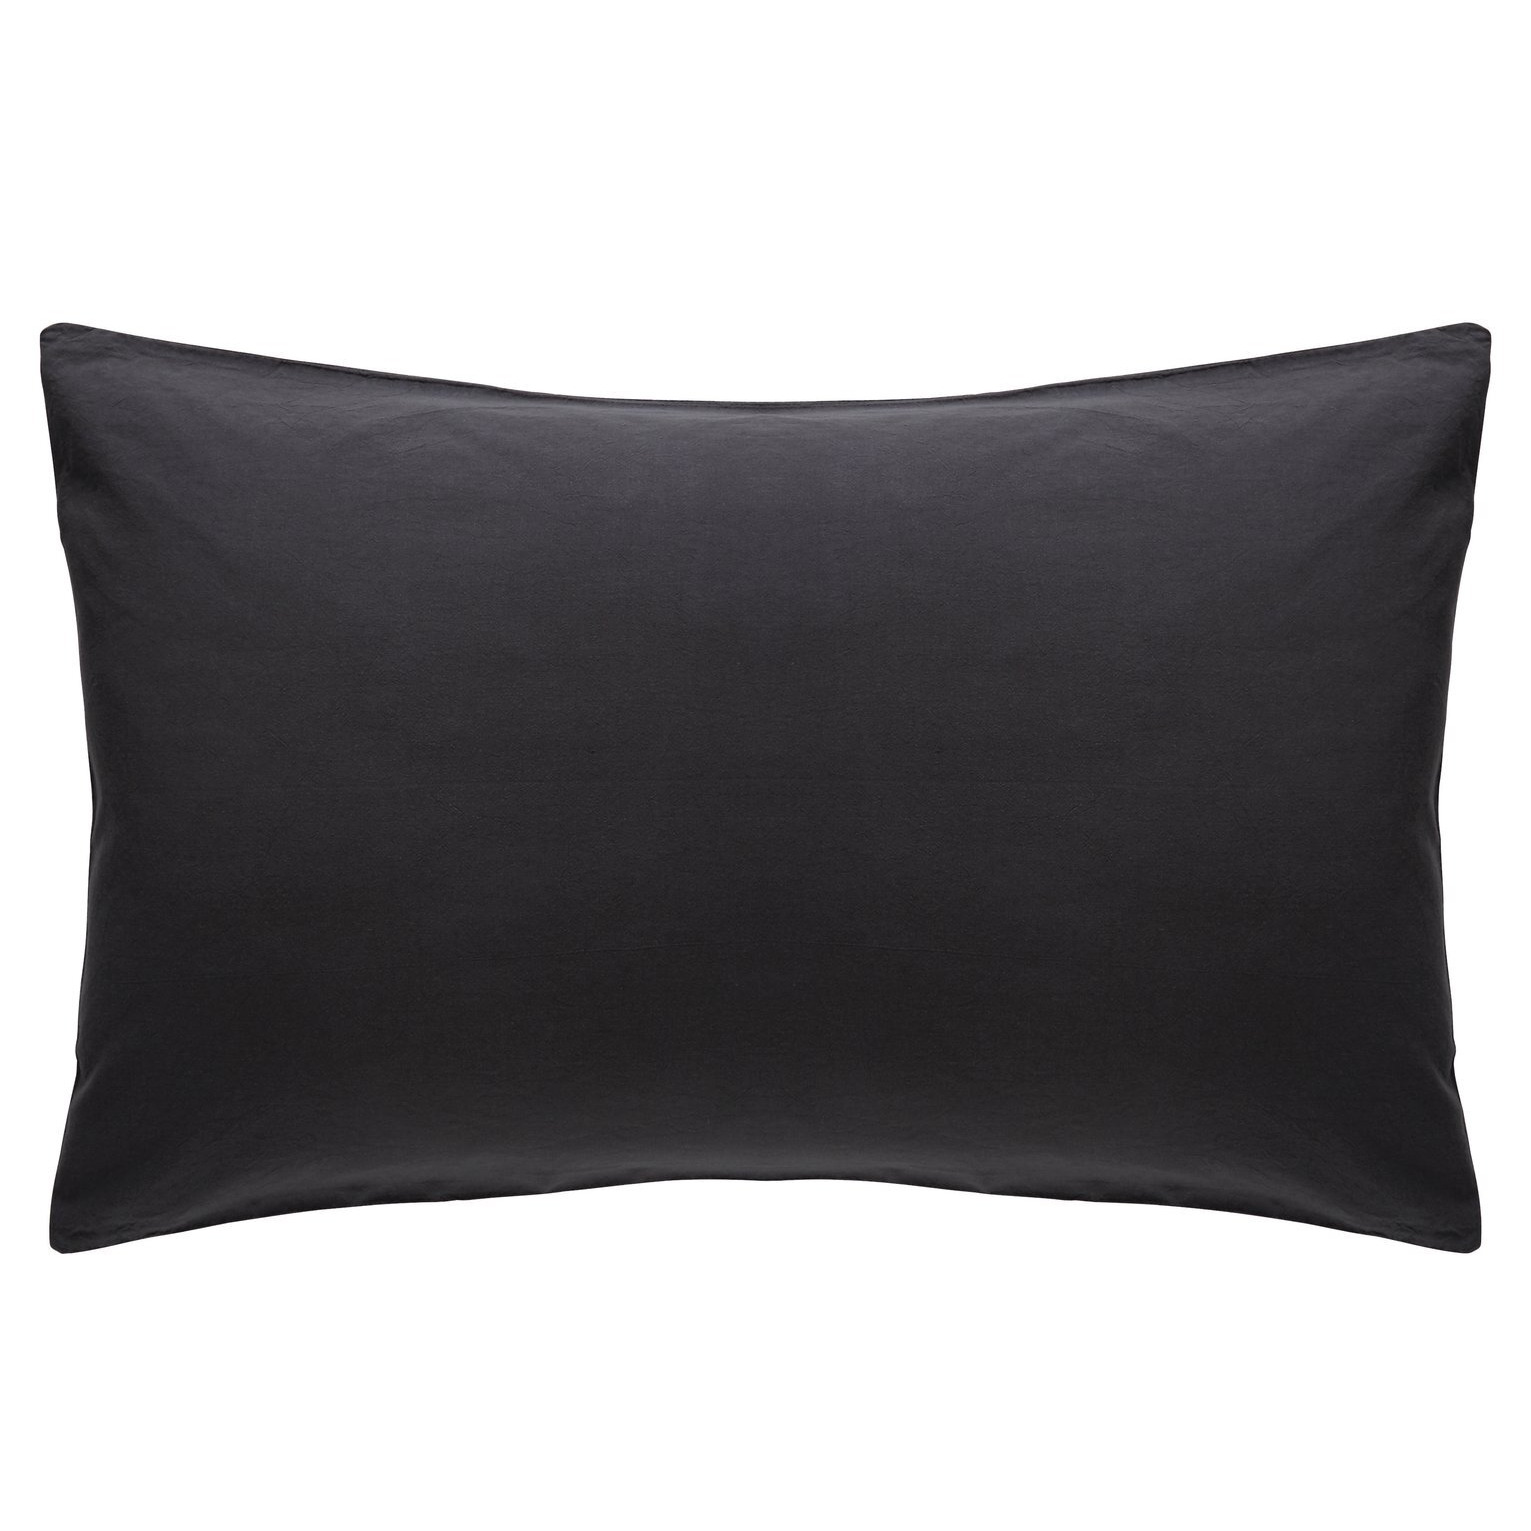 Habitat Washed Standard Pillowcase Pair - Charcoal